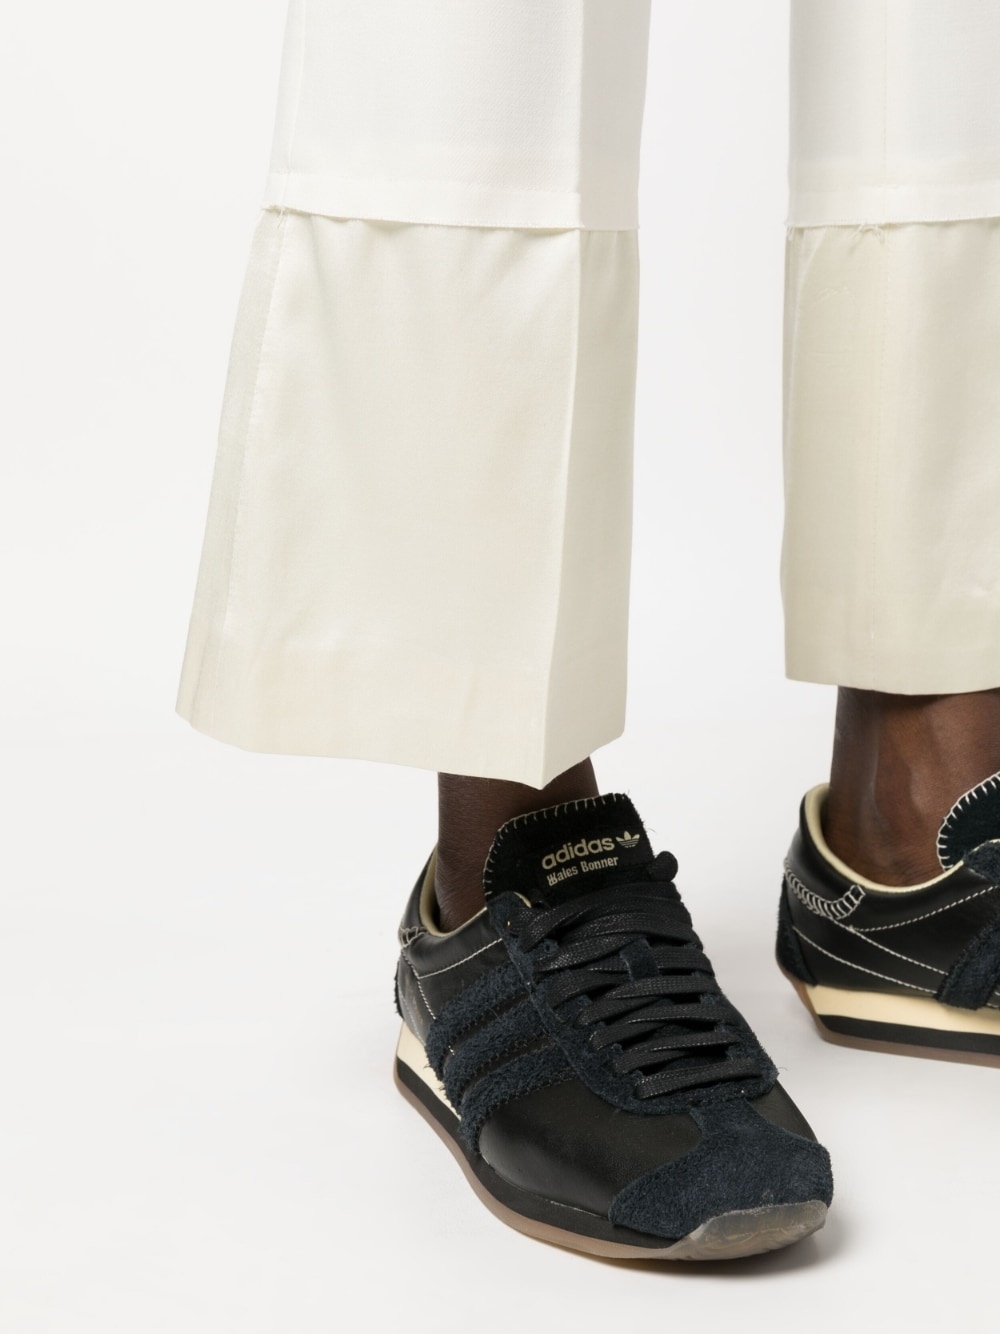 WALES BONNER Harmony straight-leg wool trousers | REVERSIBLE